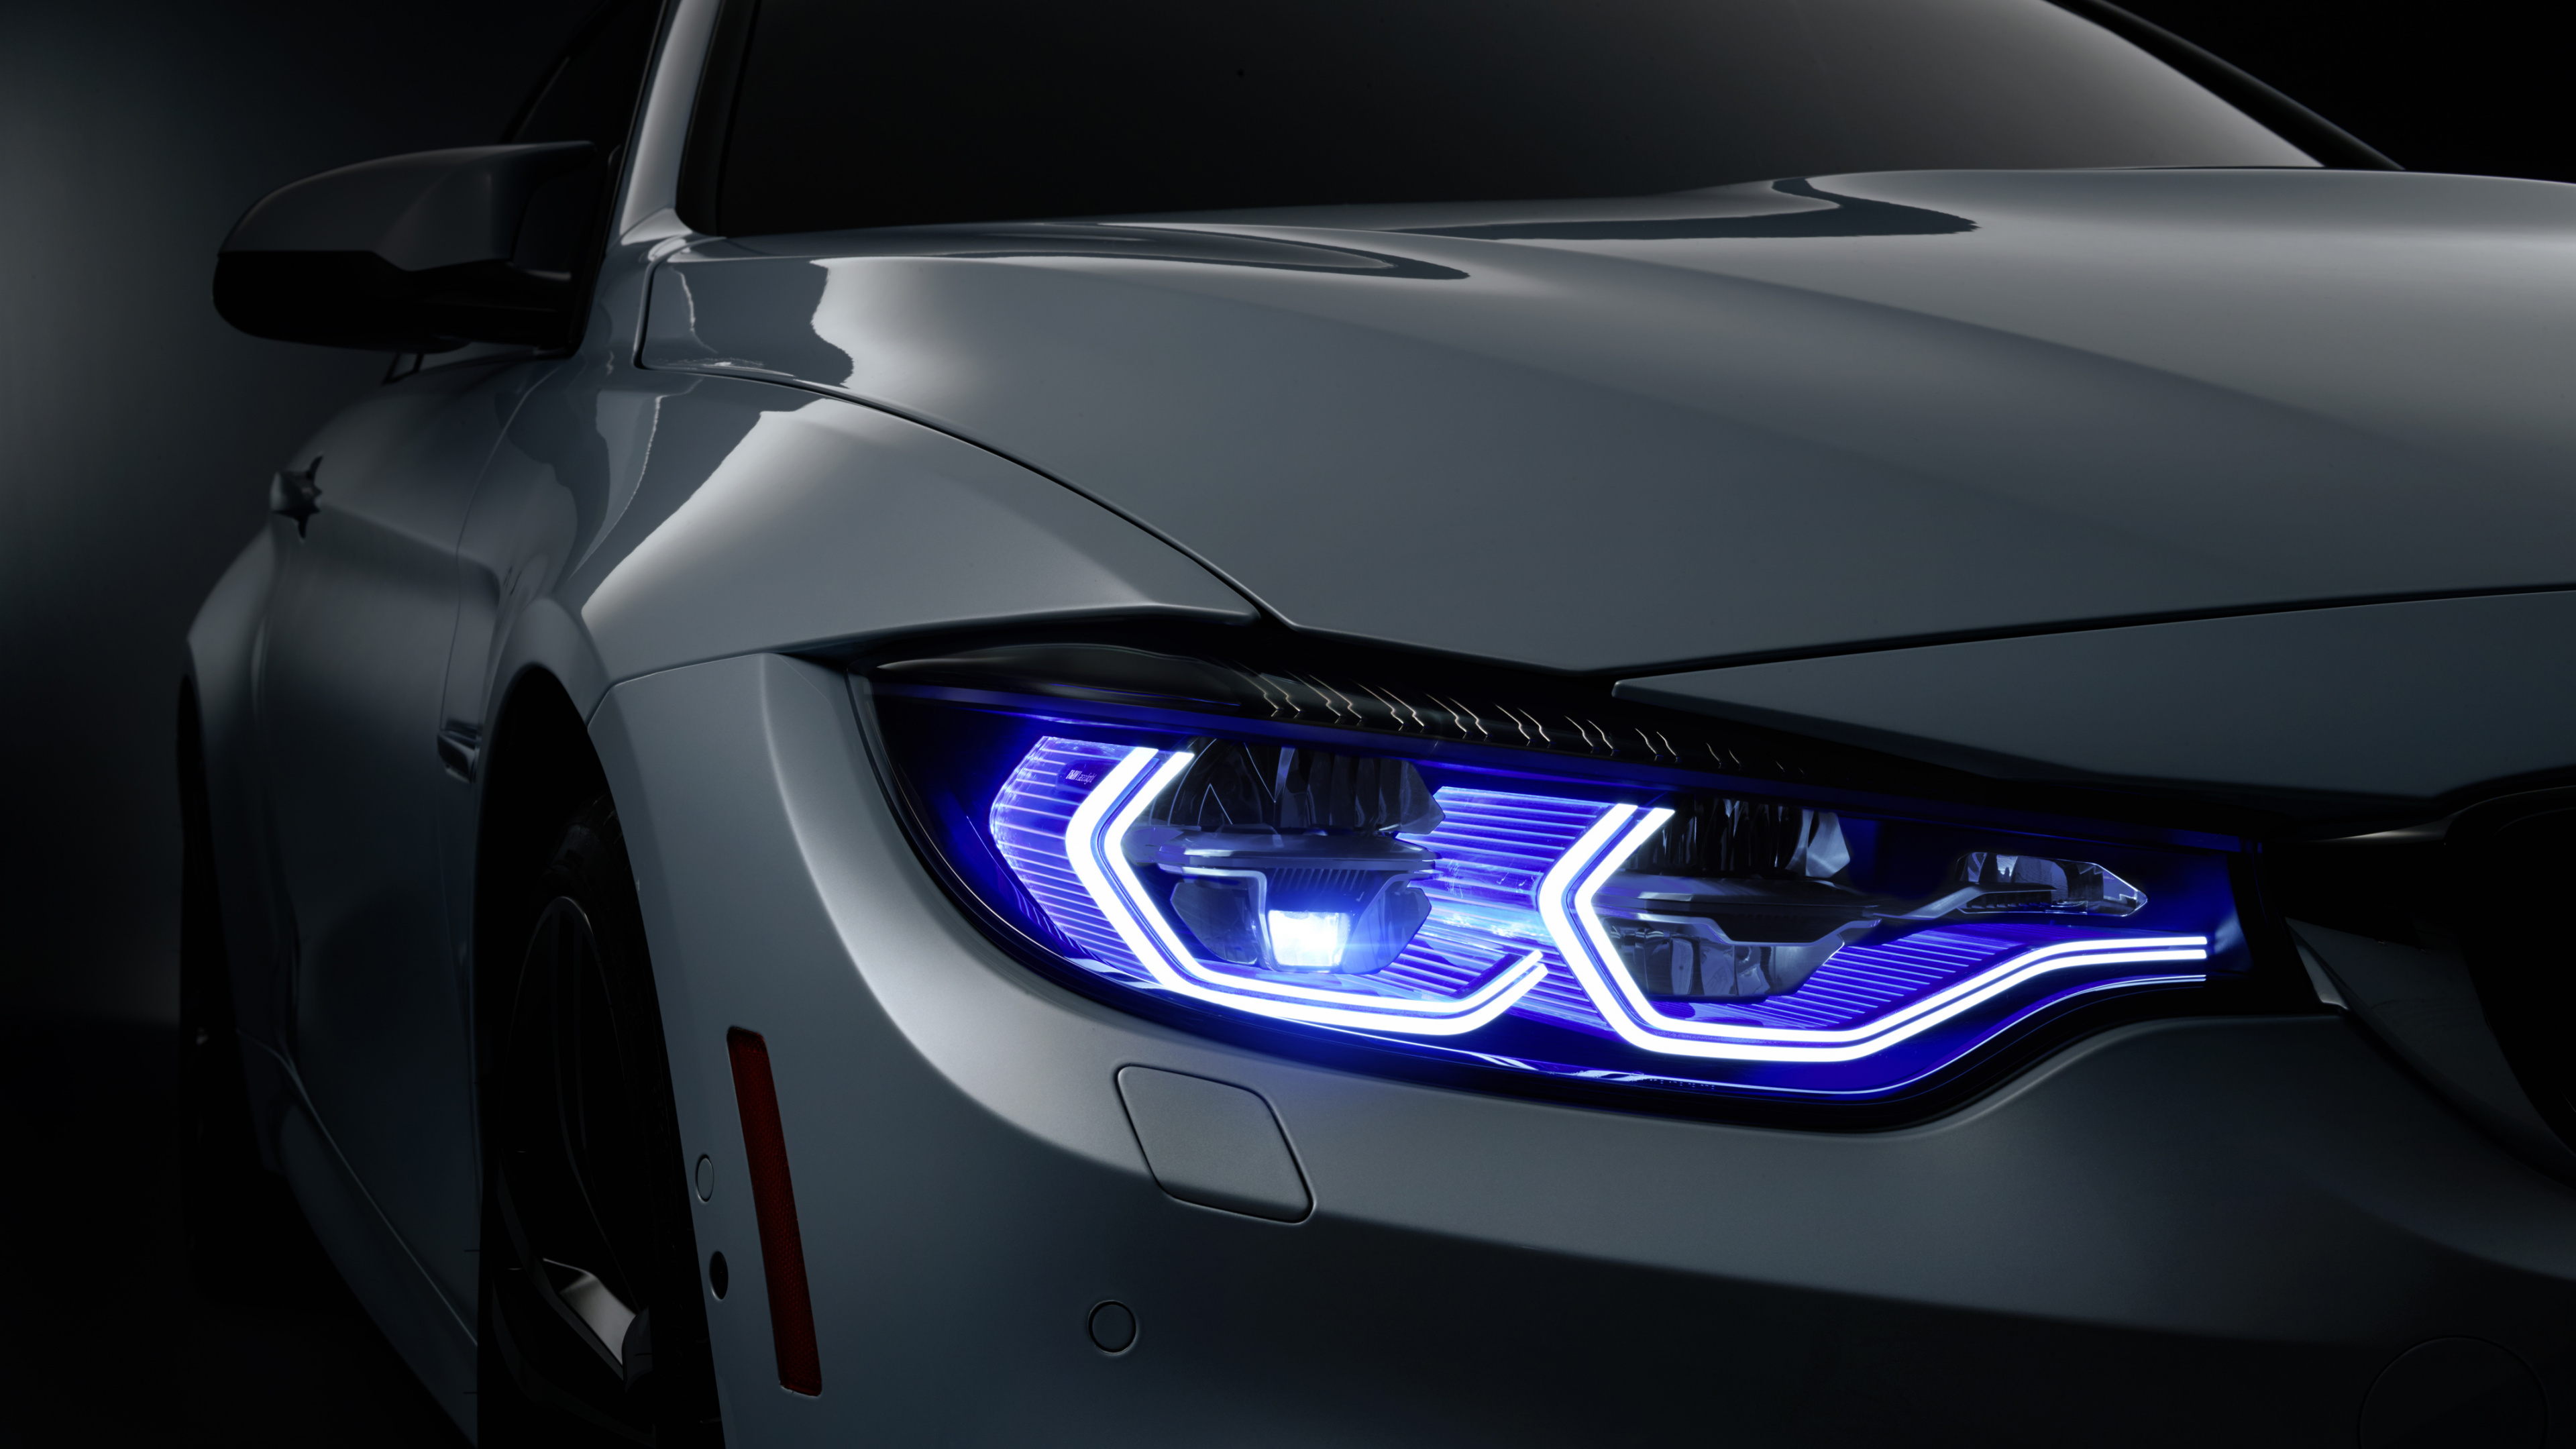 Light avto. BMW m9. BMW m4 iconic Lights. Лазерные фары БМВ m4.